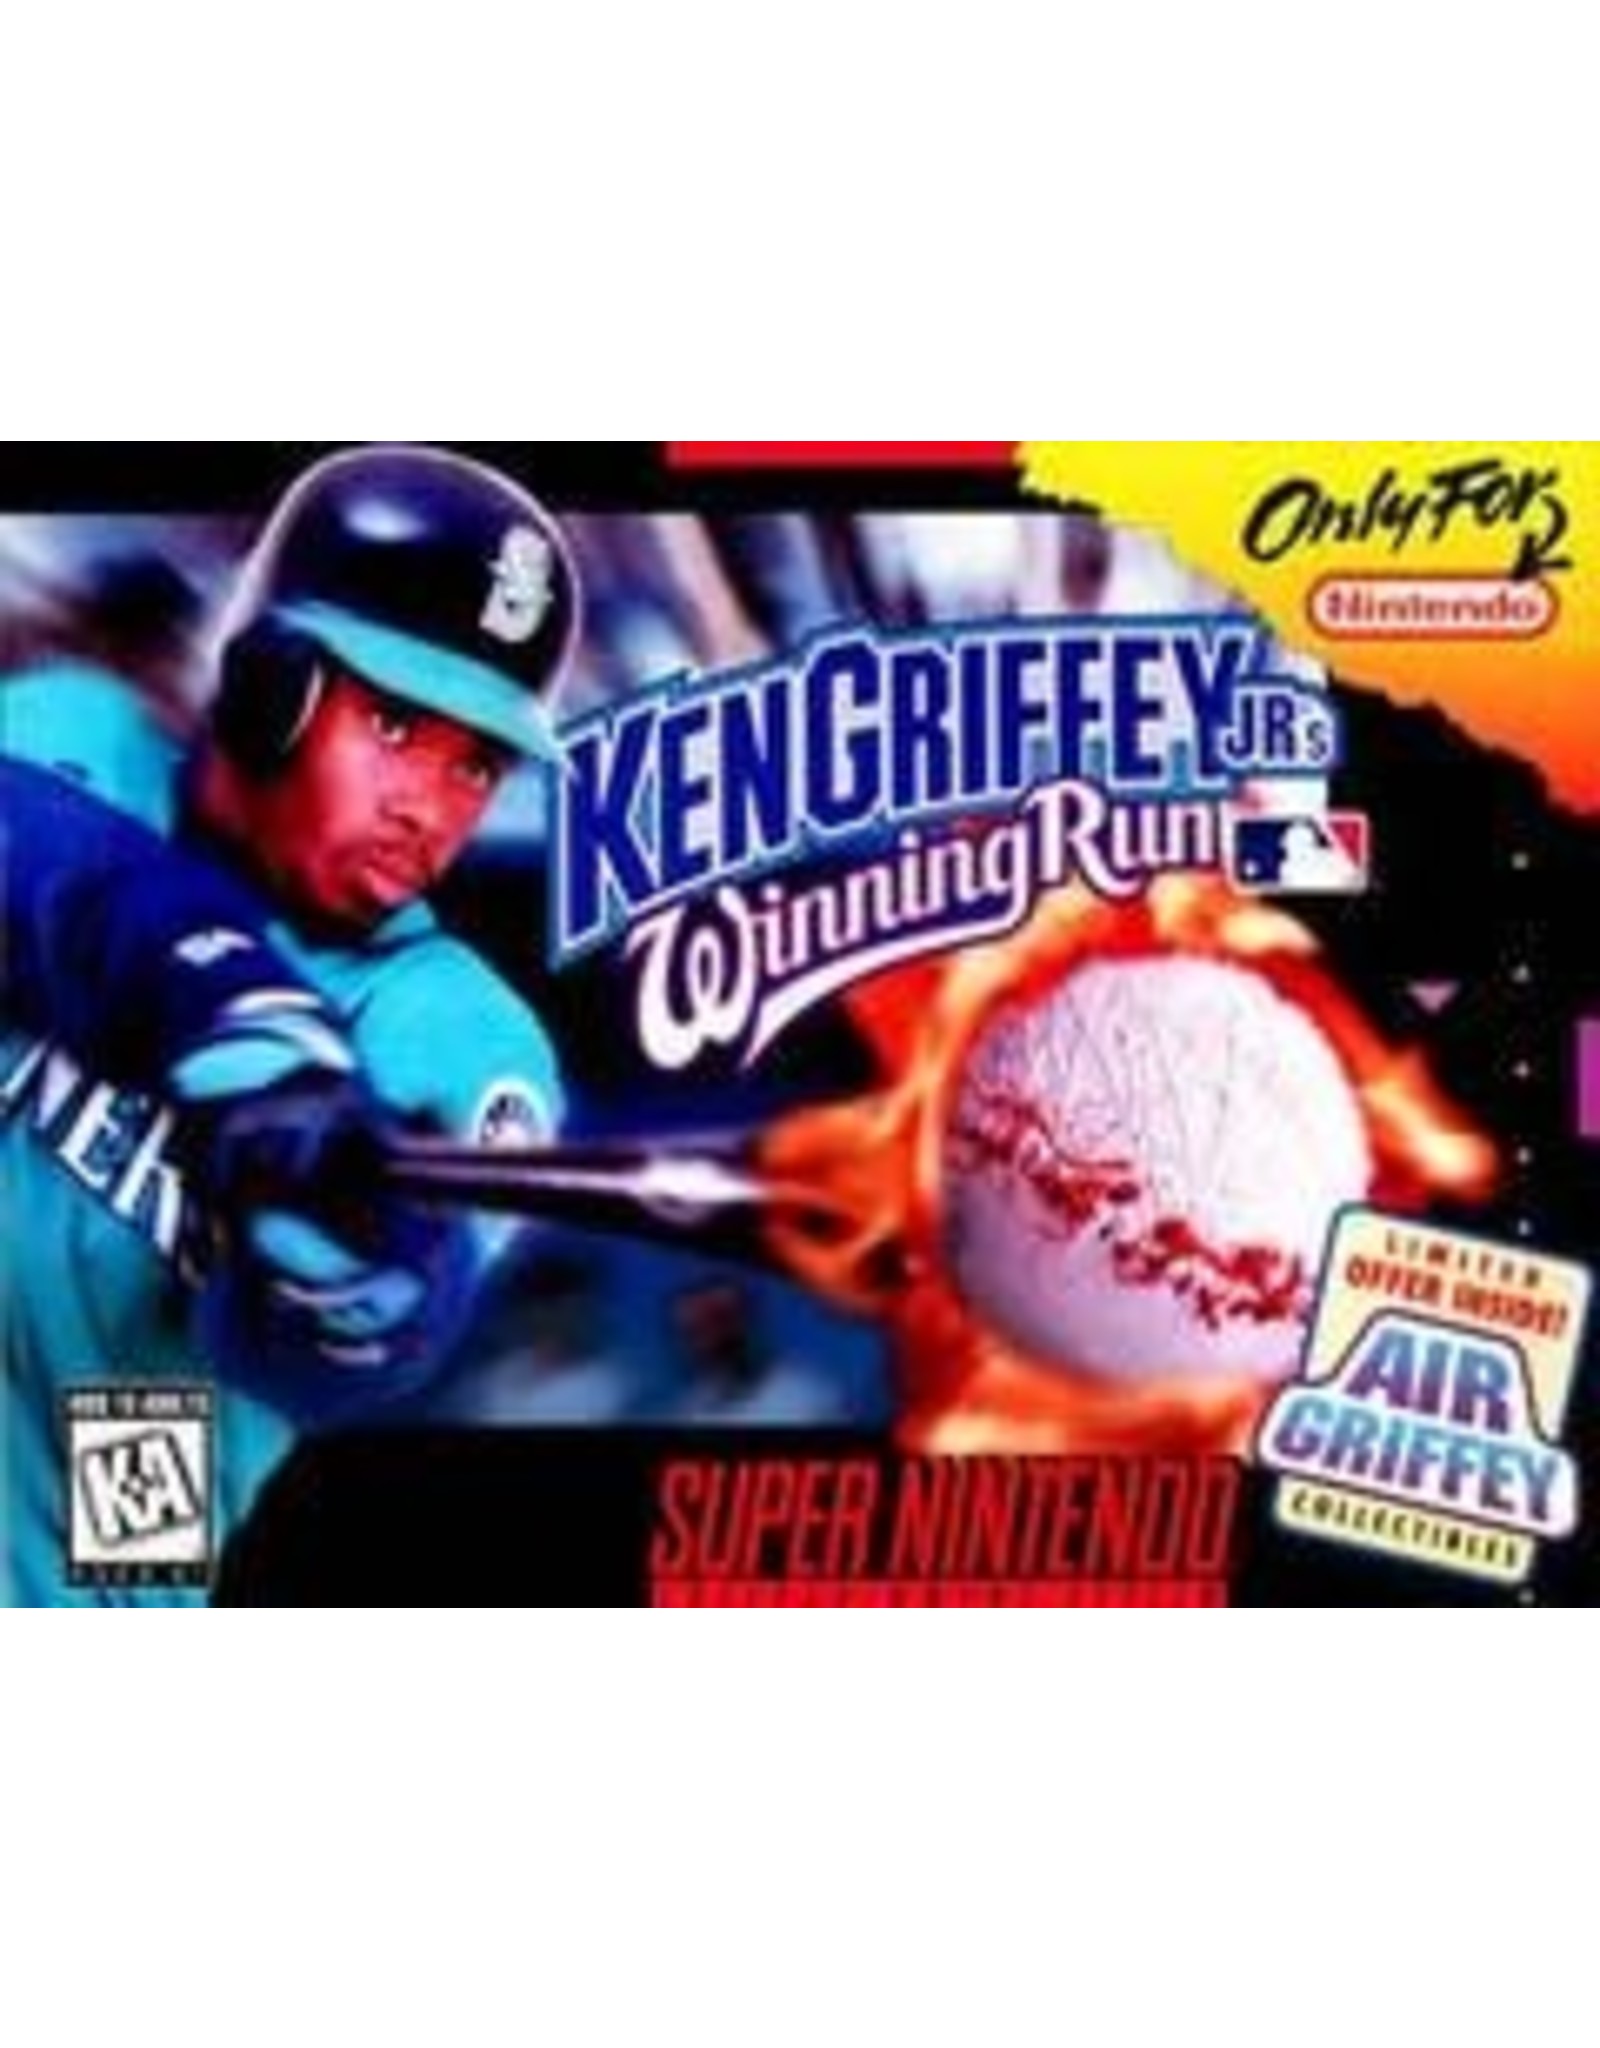 Super Nintendo Ken Griffey Jr's Winning Run (CiB, Damaged Box and Manual)